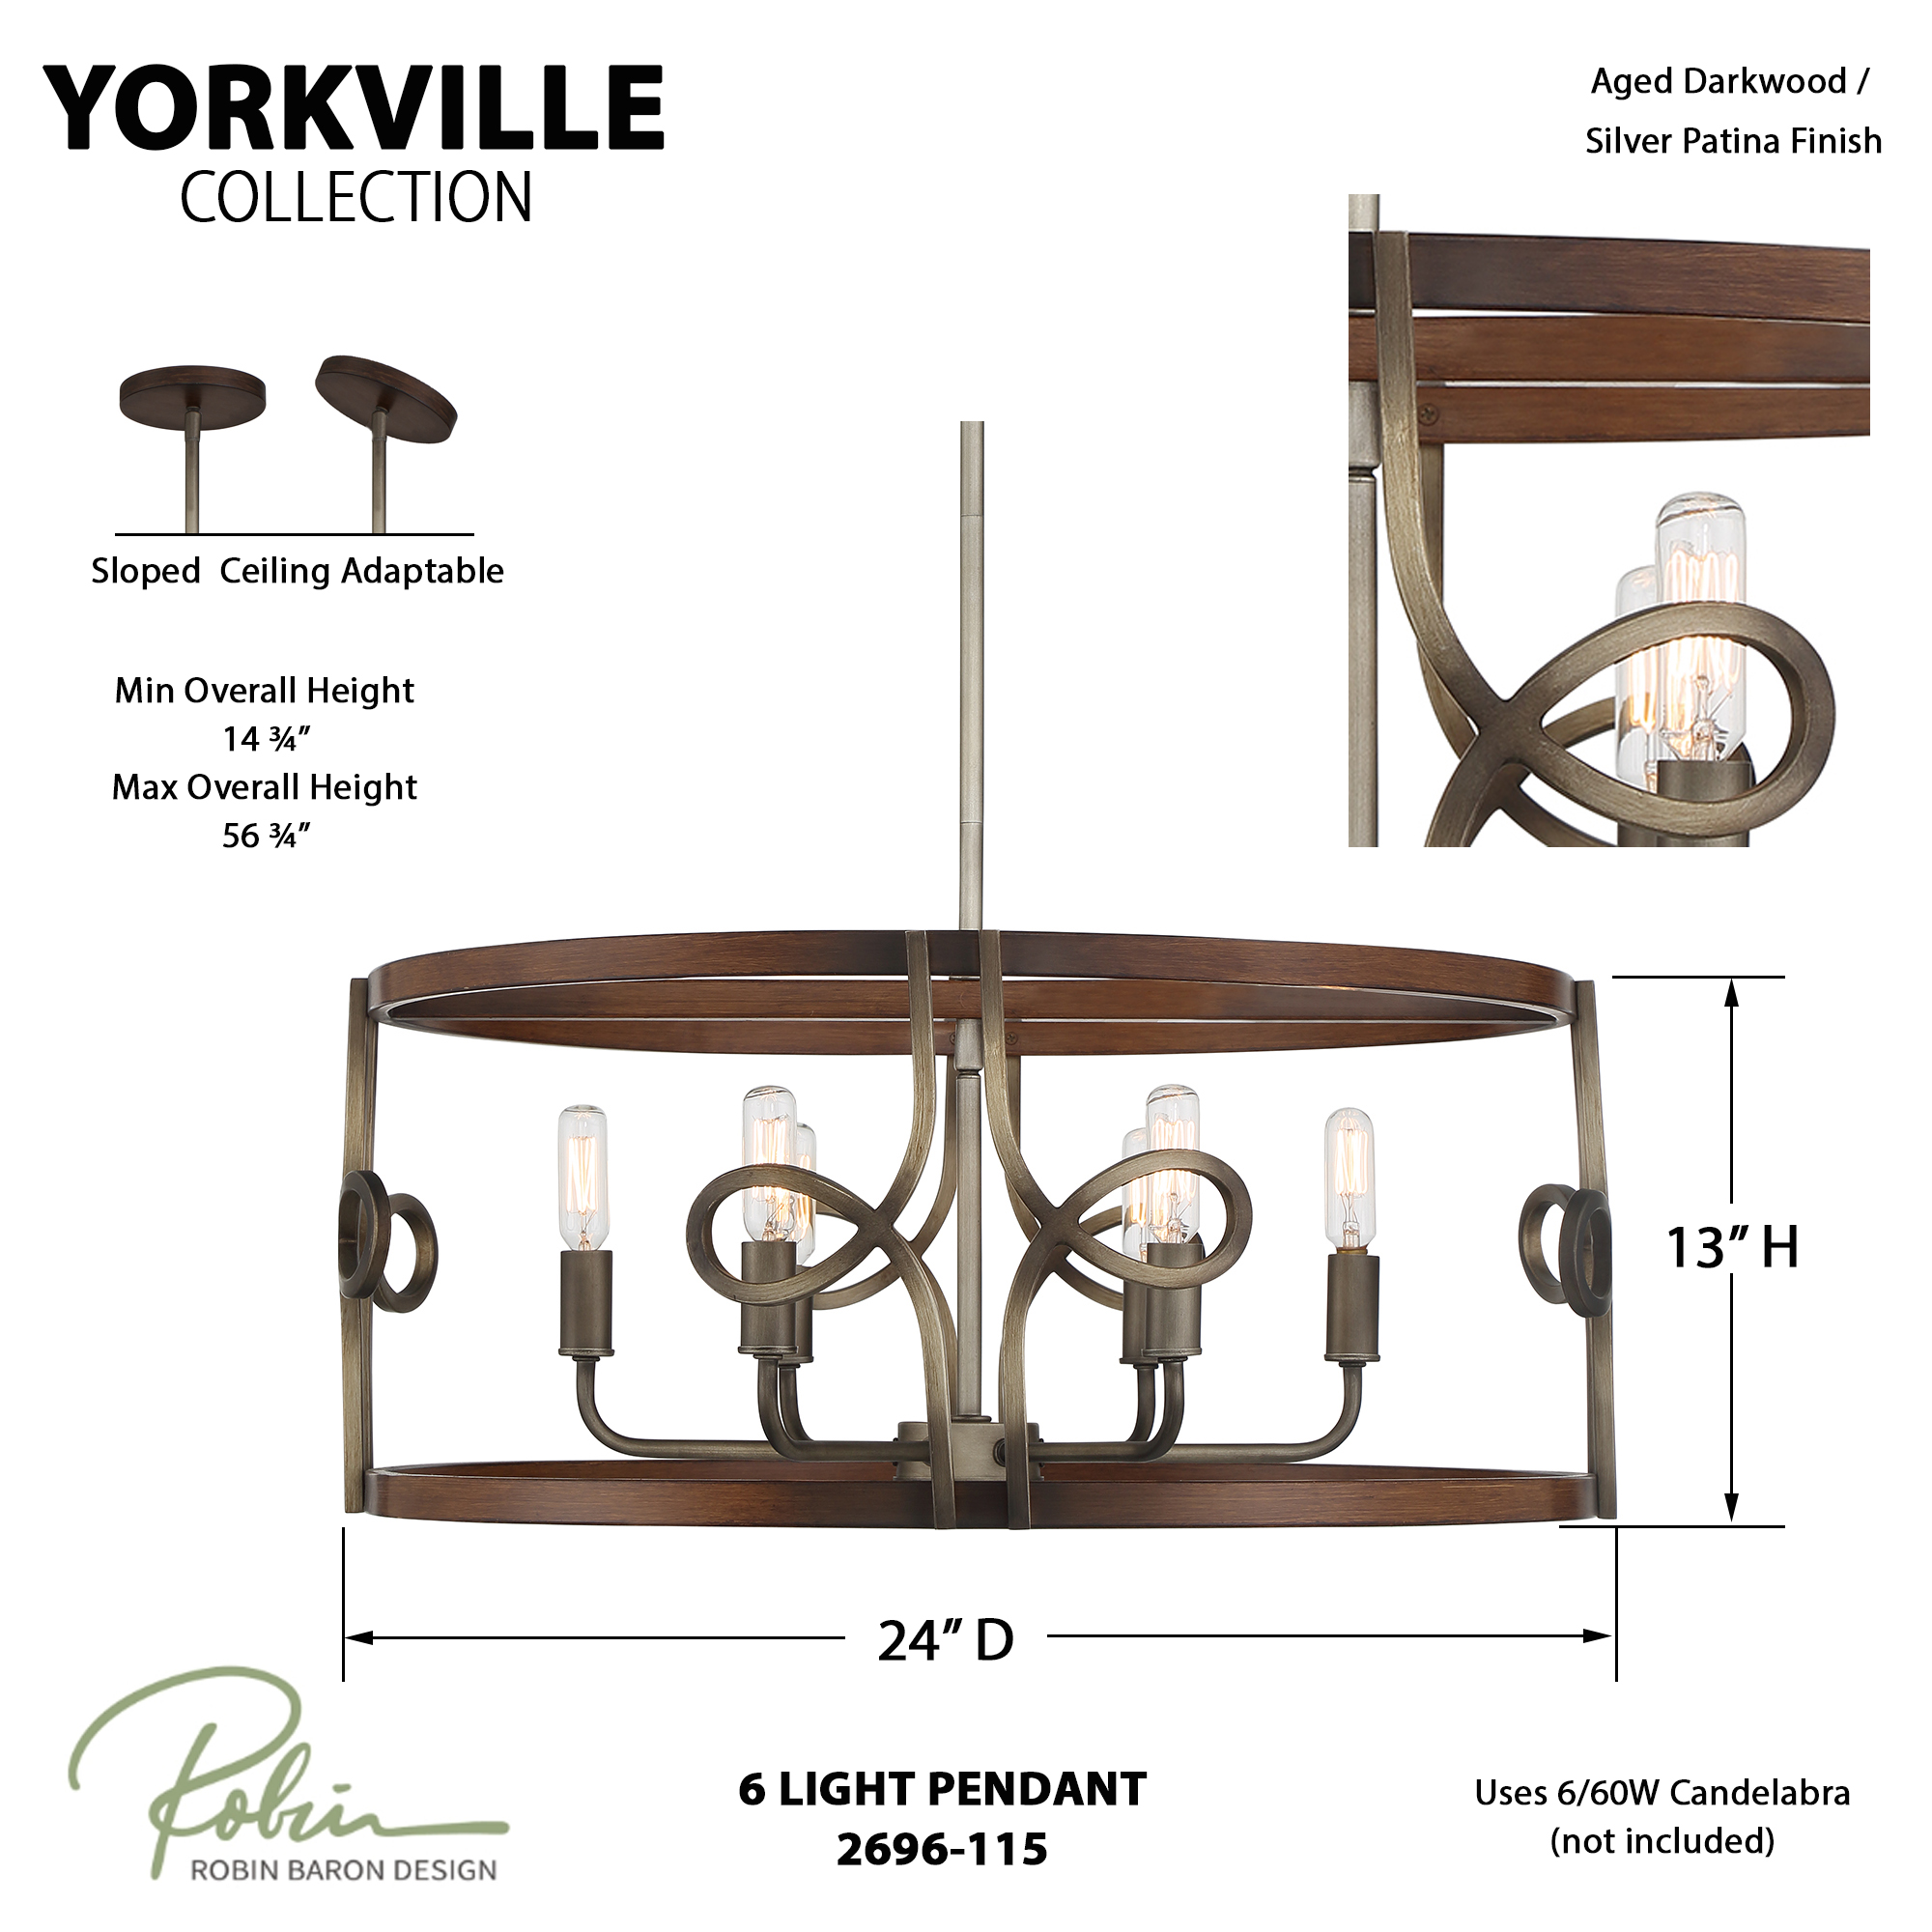 Yorkville - 6 Light Pendant, a Robin Baron Design